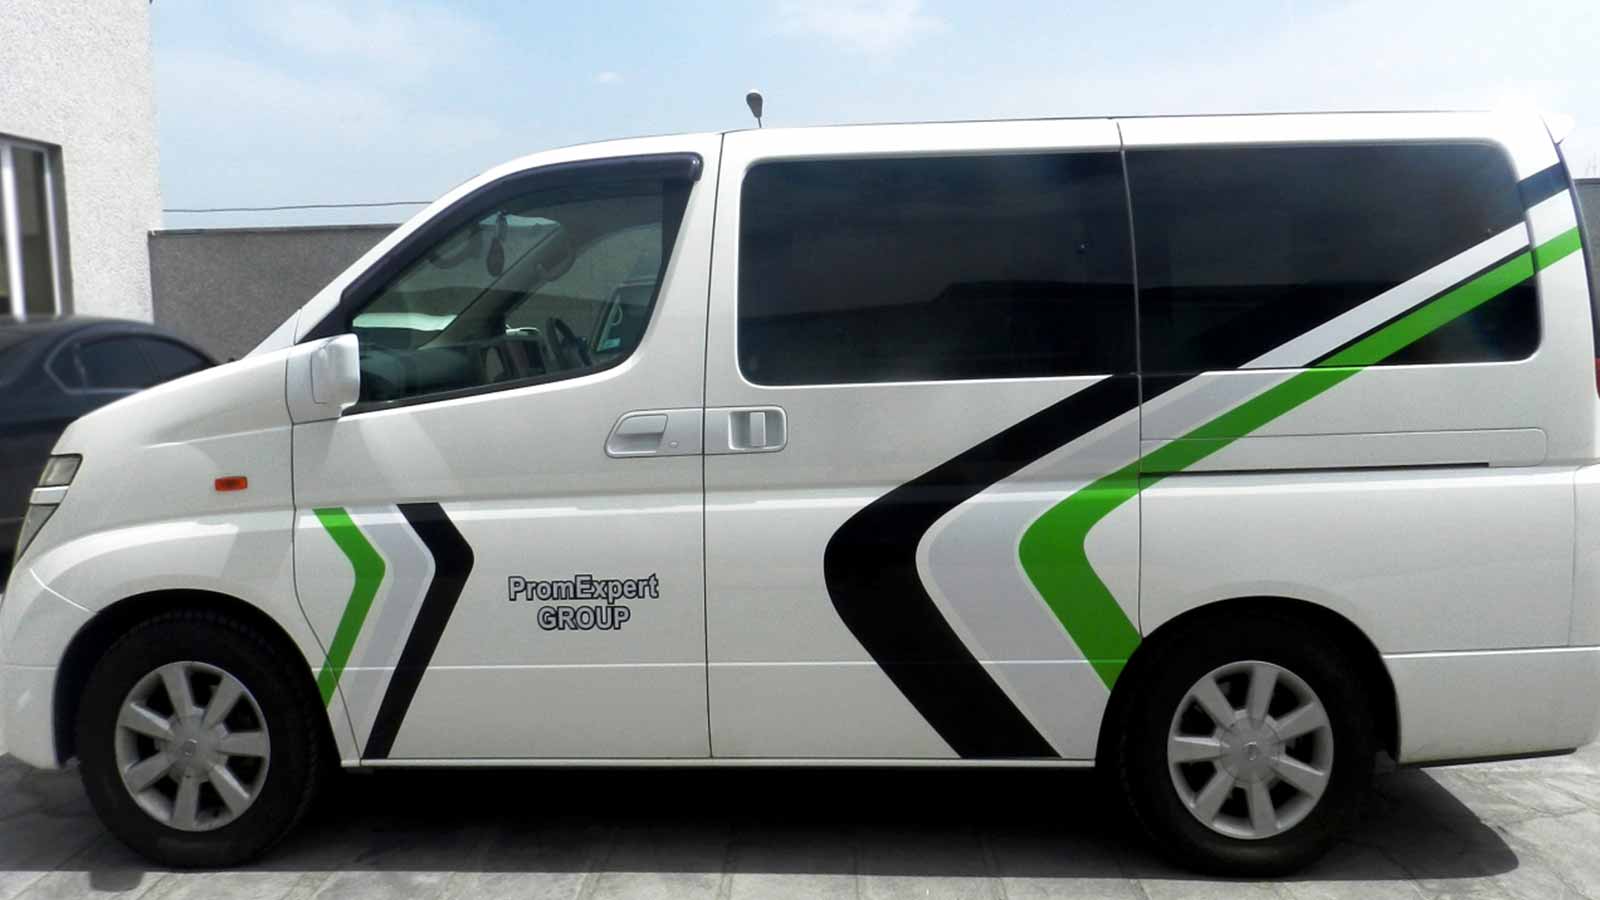 promexpert group business car branding